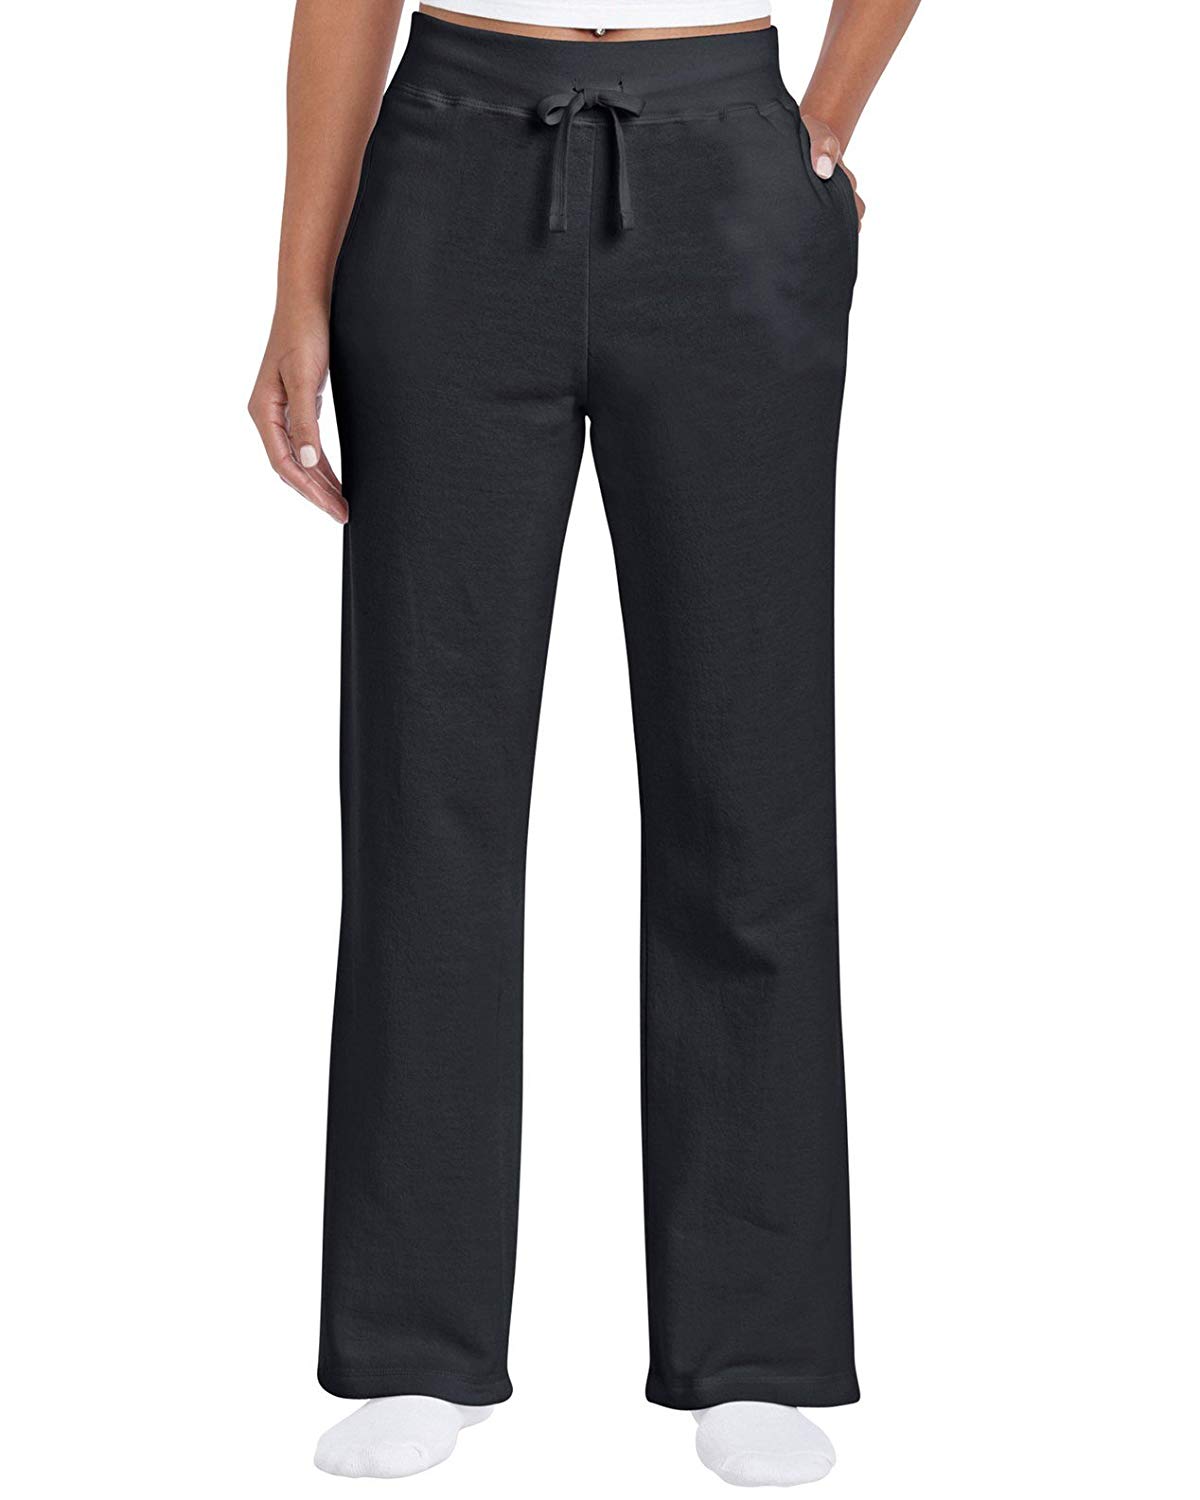 Gildan Women's Open Bottom Sweatpants, Black, 2X-Large, Black, Size XX ...